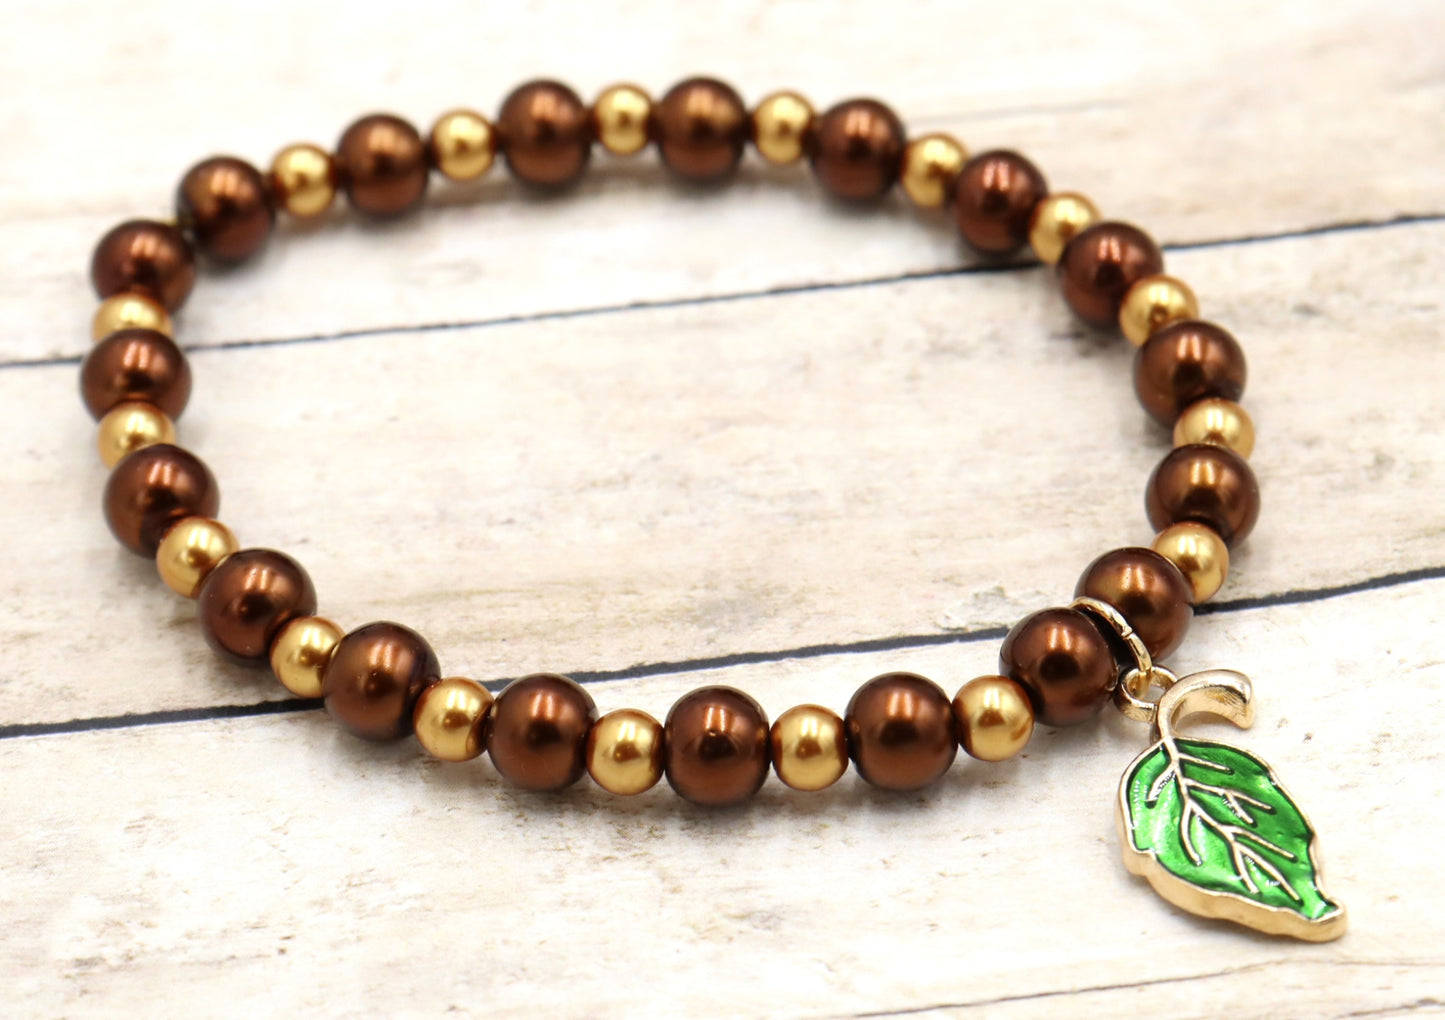 Golden Pearls, Rich Oak, and Green Leaf Charm - Women's Autumn / Fall Glass Bead Stretch Bracelet by Monkey's Mojo